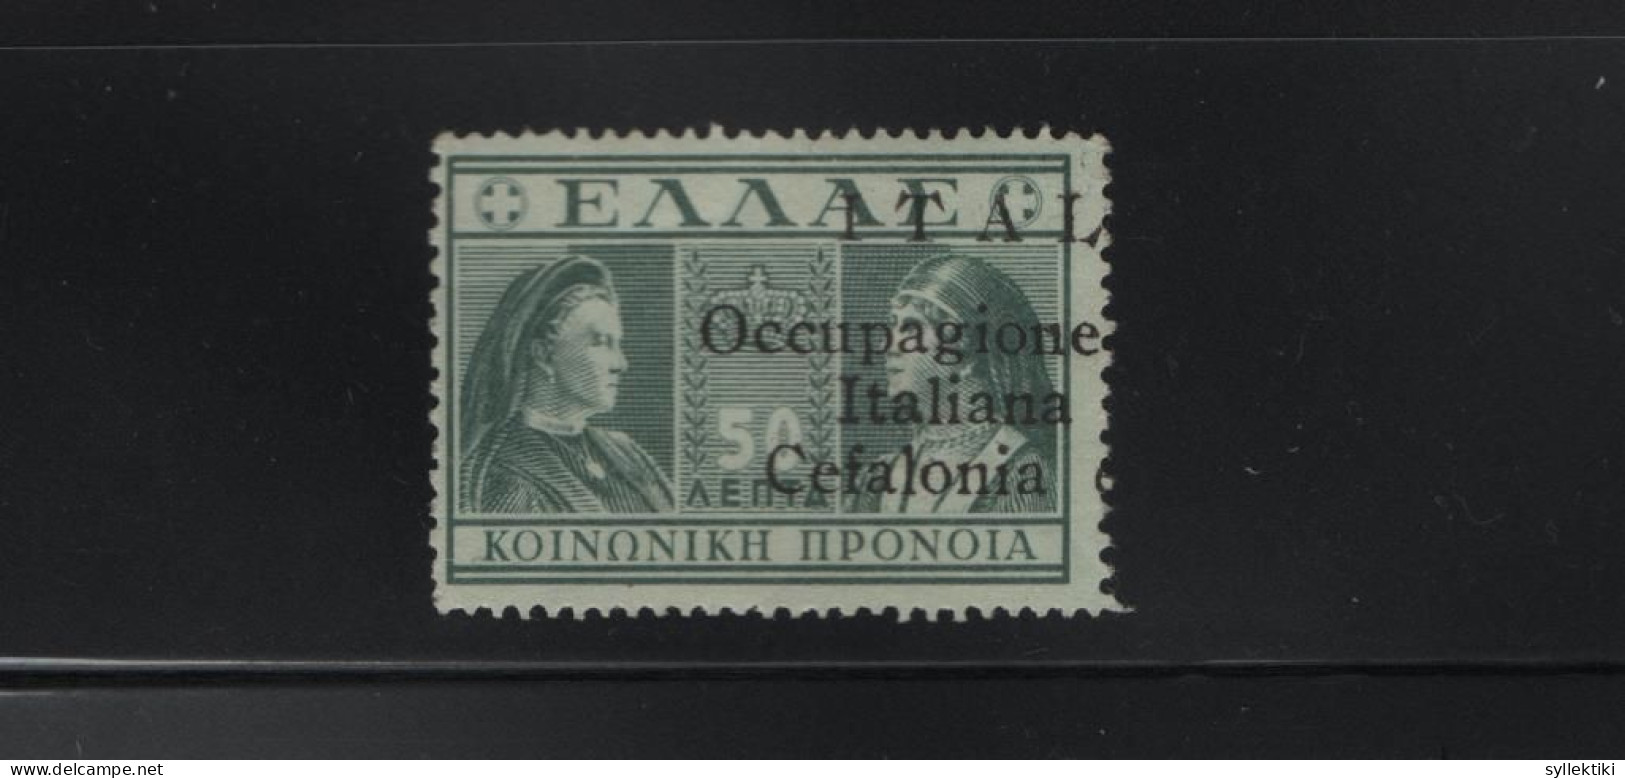 GREECE IONIAN ISLANDS 1941 50 LEPTA CHARITY ISSUE (QUEENS) SINGLE  MNH STAMP OVERPRINTED ITALIA Occupazione Militare Ita - Ionische Inseln